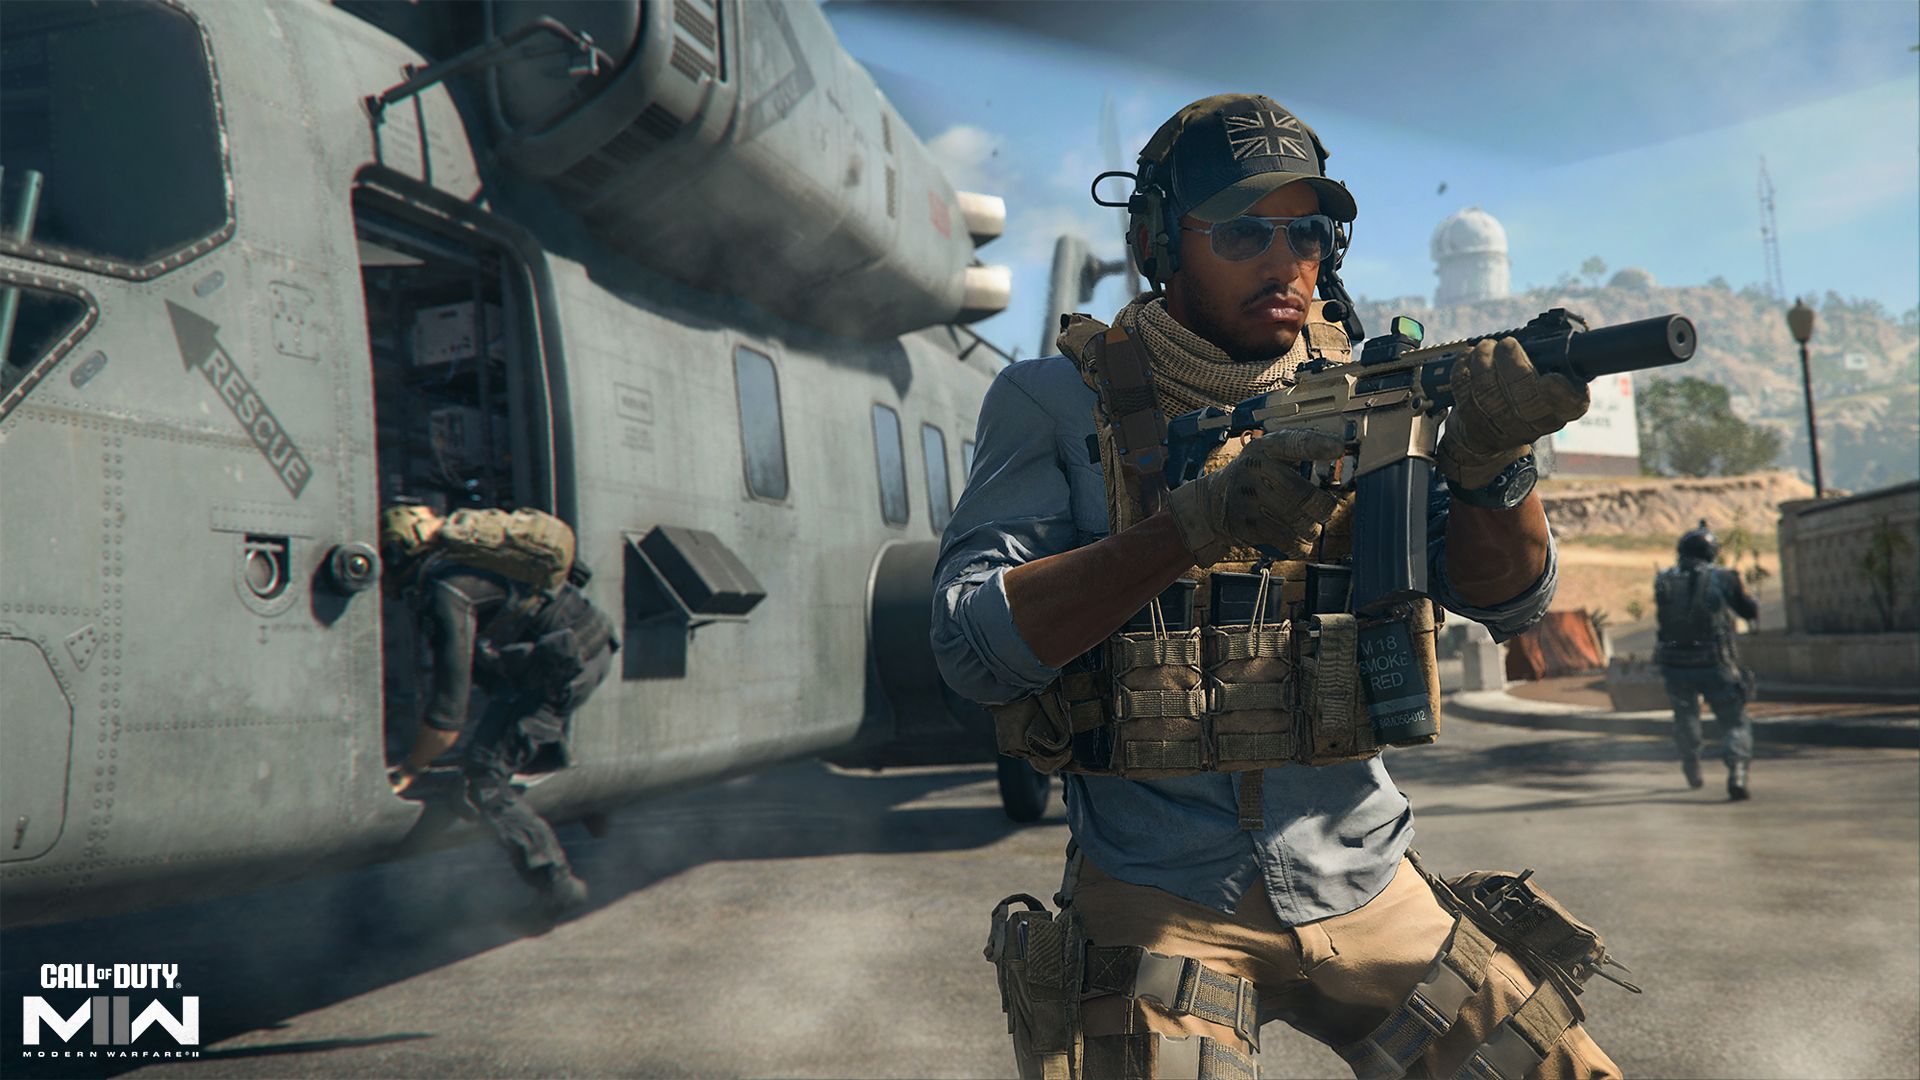 DMZ si stacca da Call of Duty Warzone